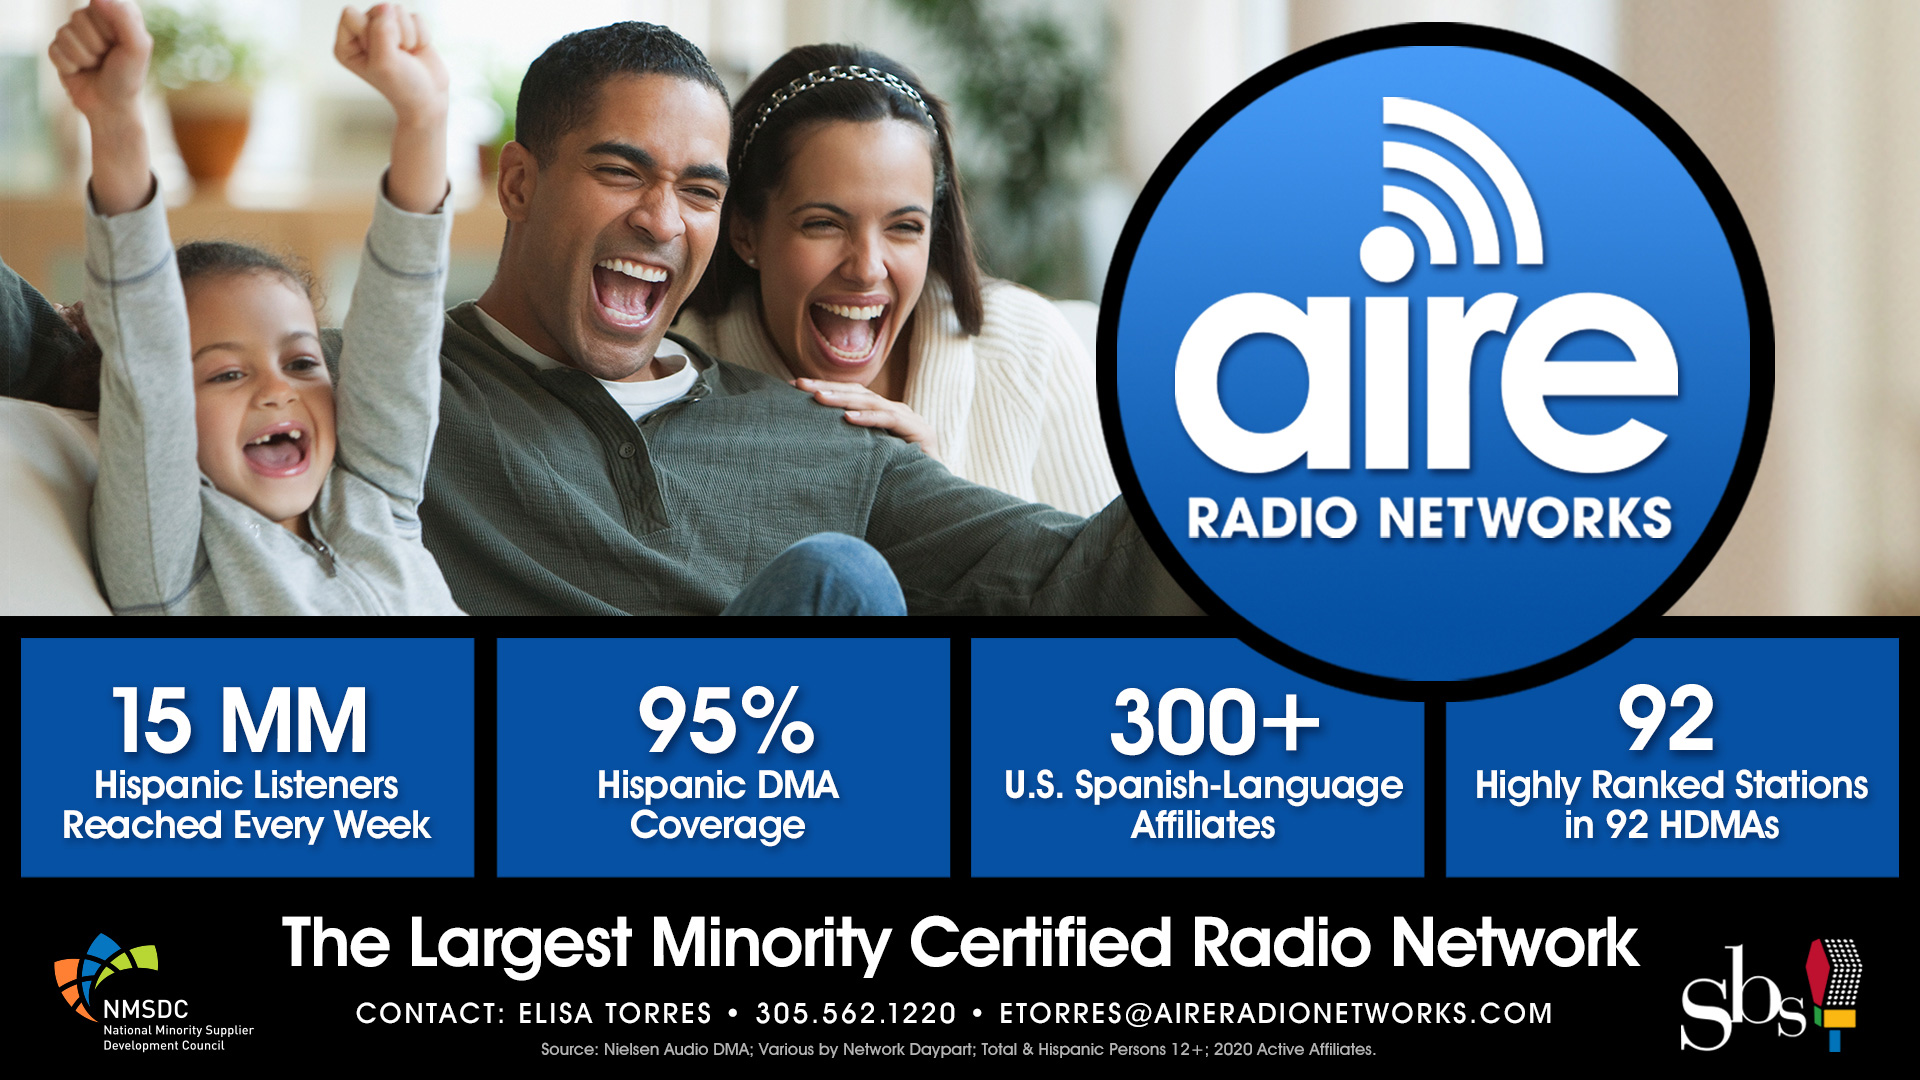 Aire Radio Networks - Culturally engage U.S. Hispanics